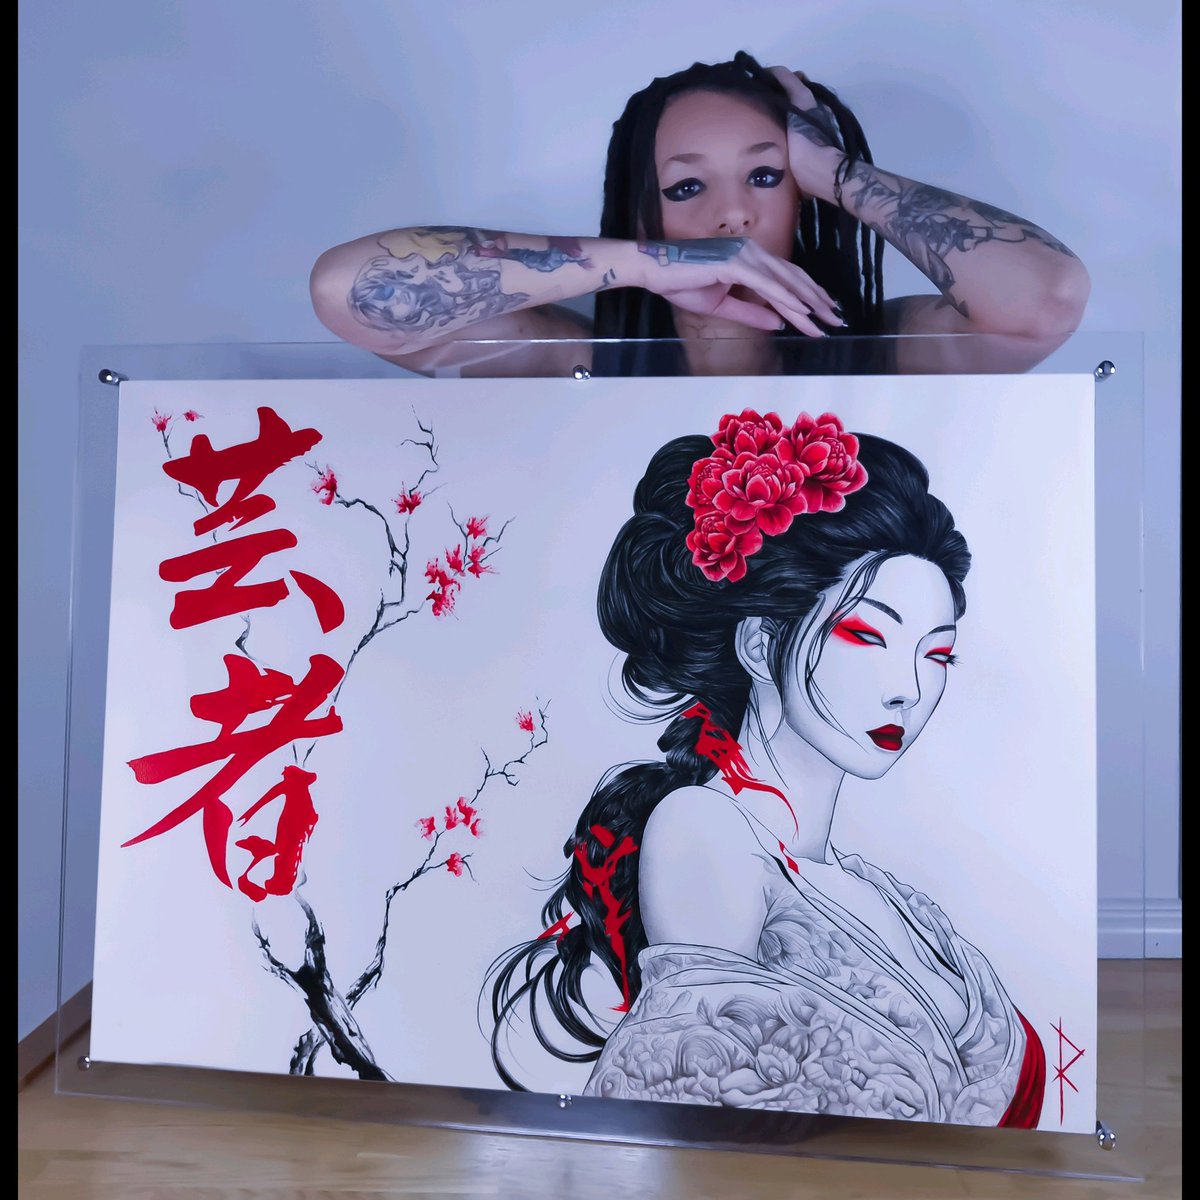 'Geisha' 

Watercolours A1 

More pictures on Instagram link in the comments!

#watercolours #watercolourpainting #watercolourartist #geisha